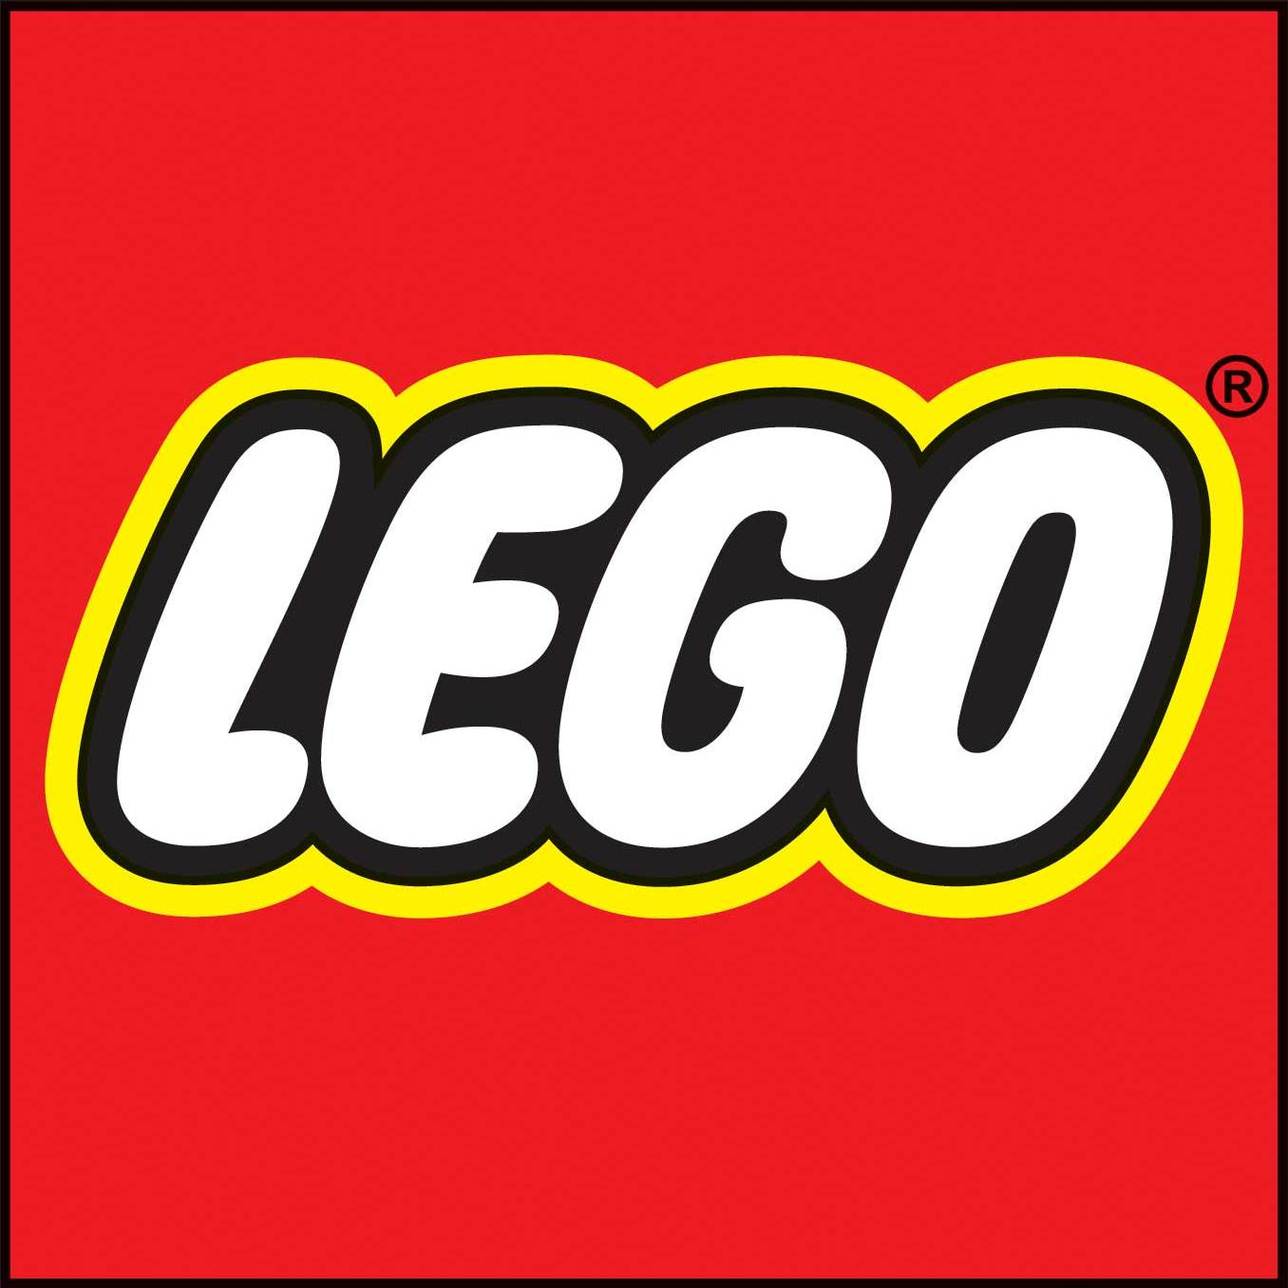 Lego worlds logo clipart